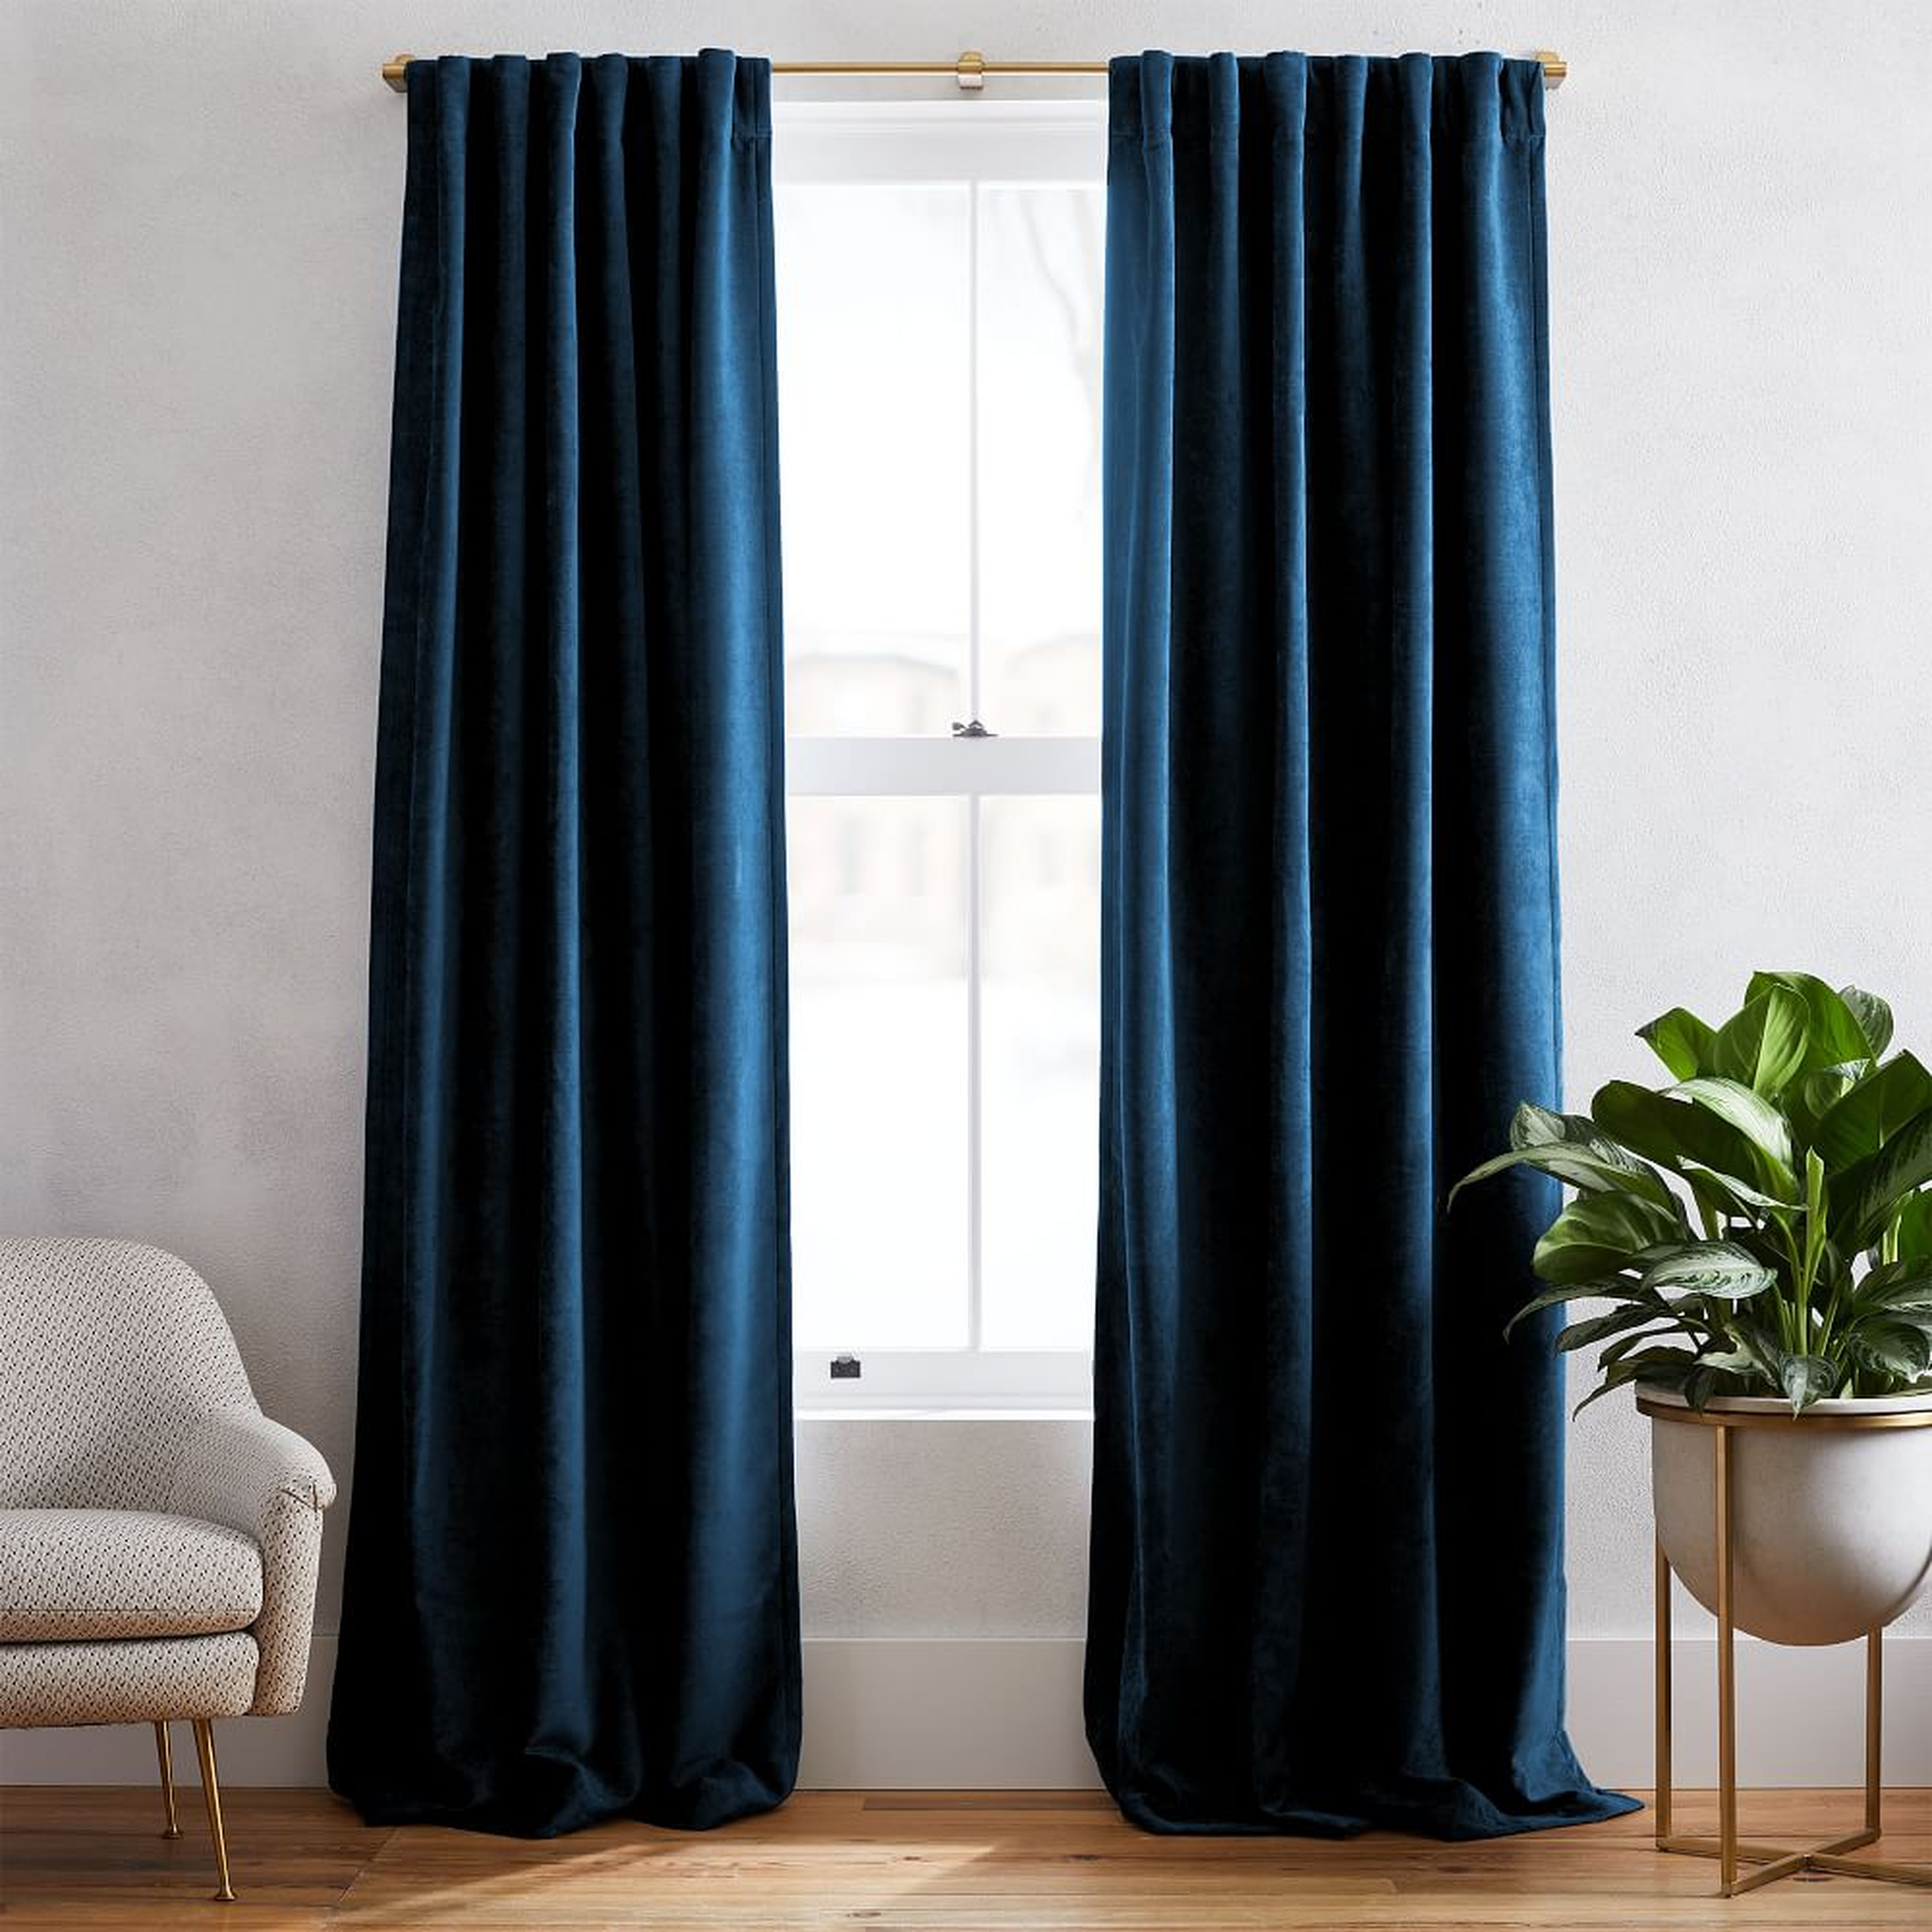 Worn Velvet Curtain with Cotton Lining, Regal Blue, 48"x84" - West Elm